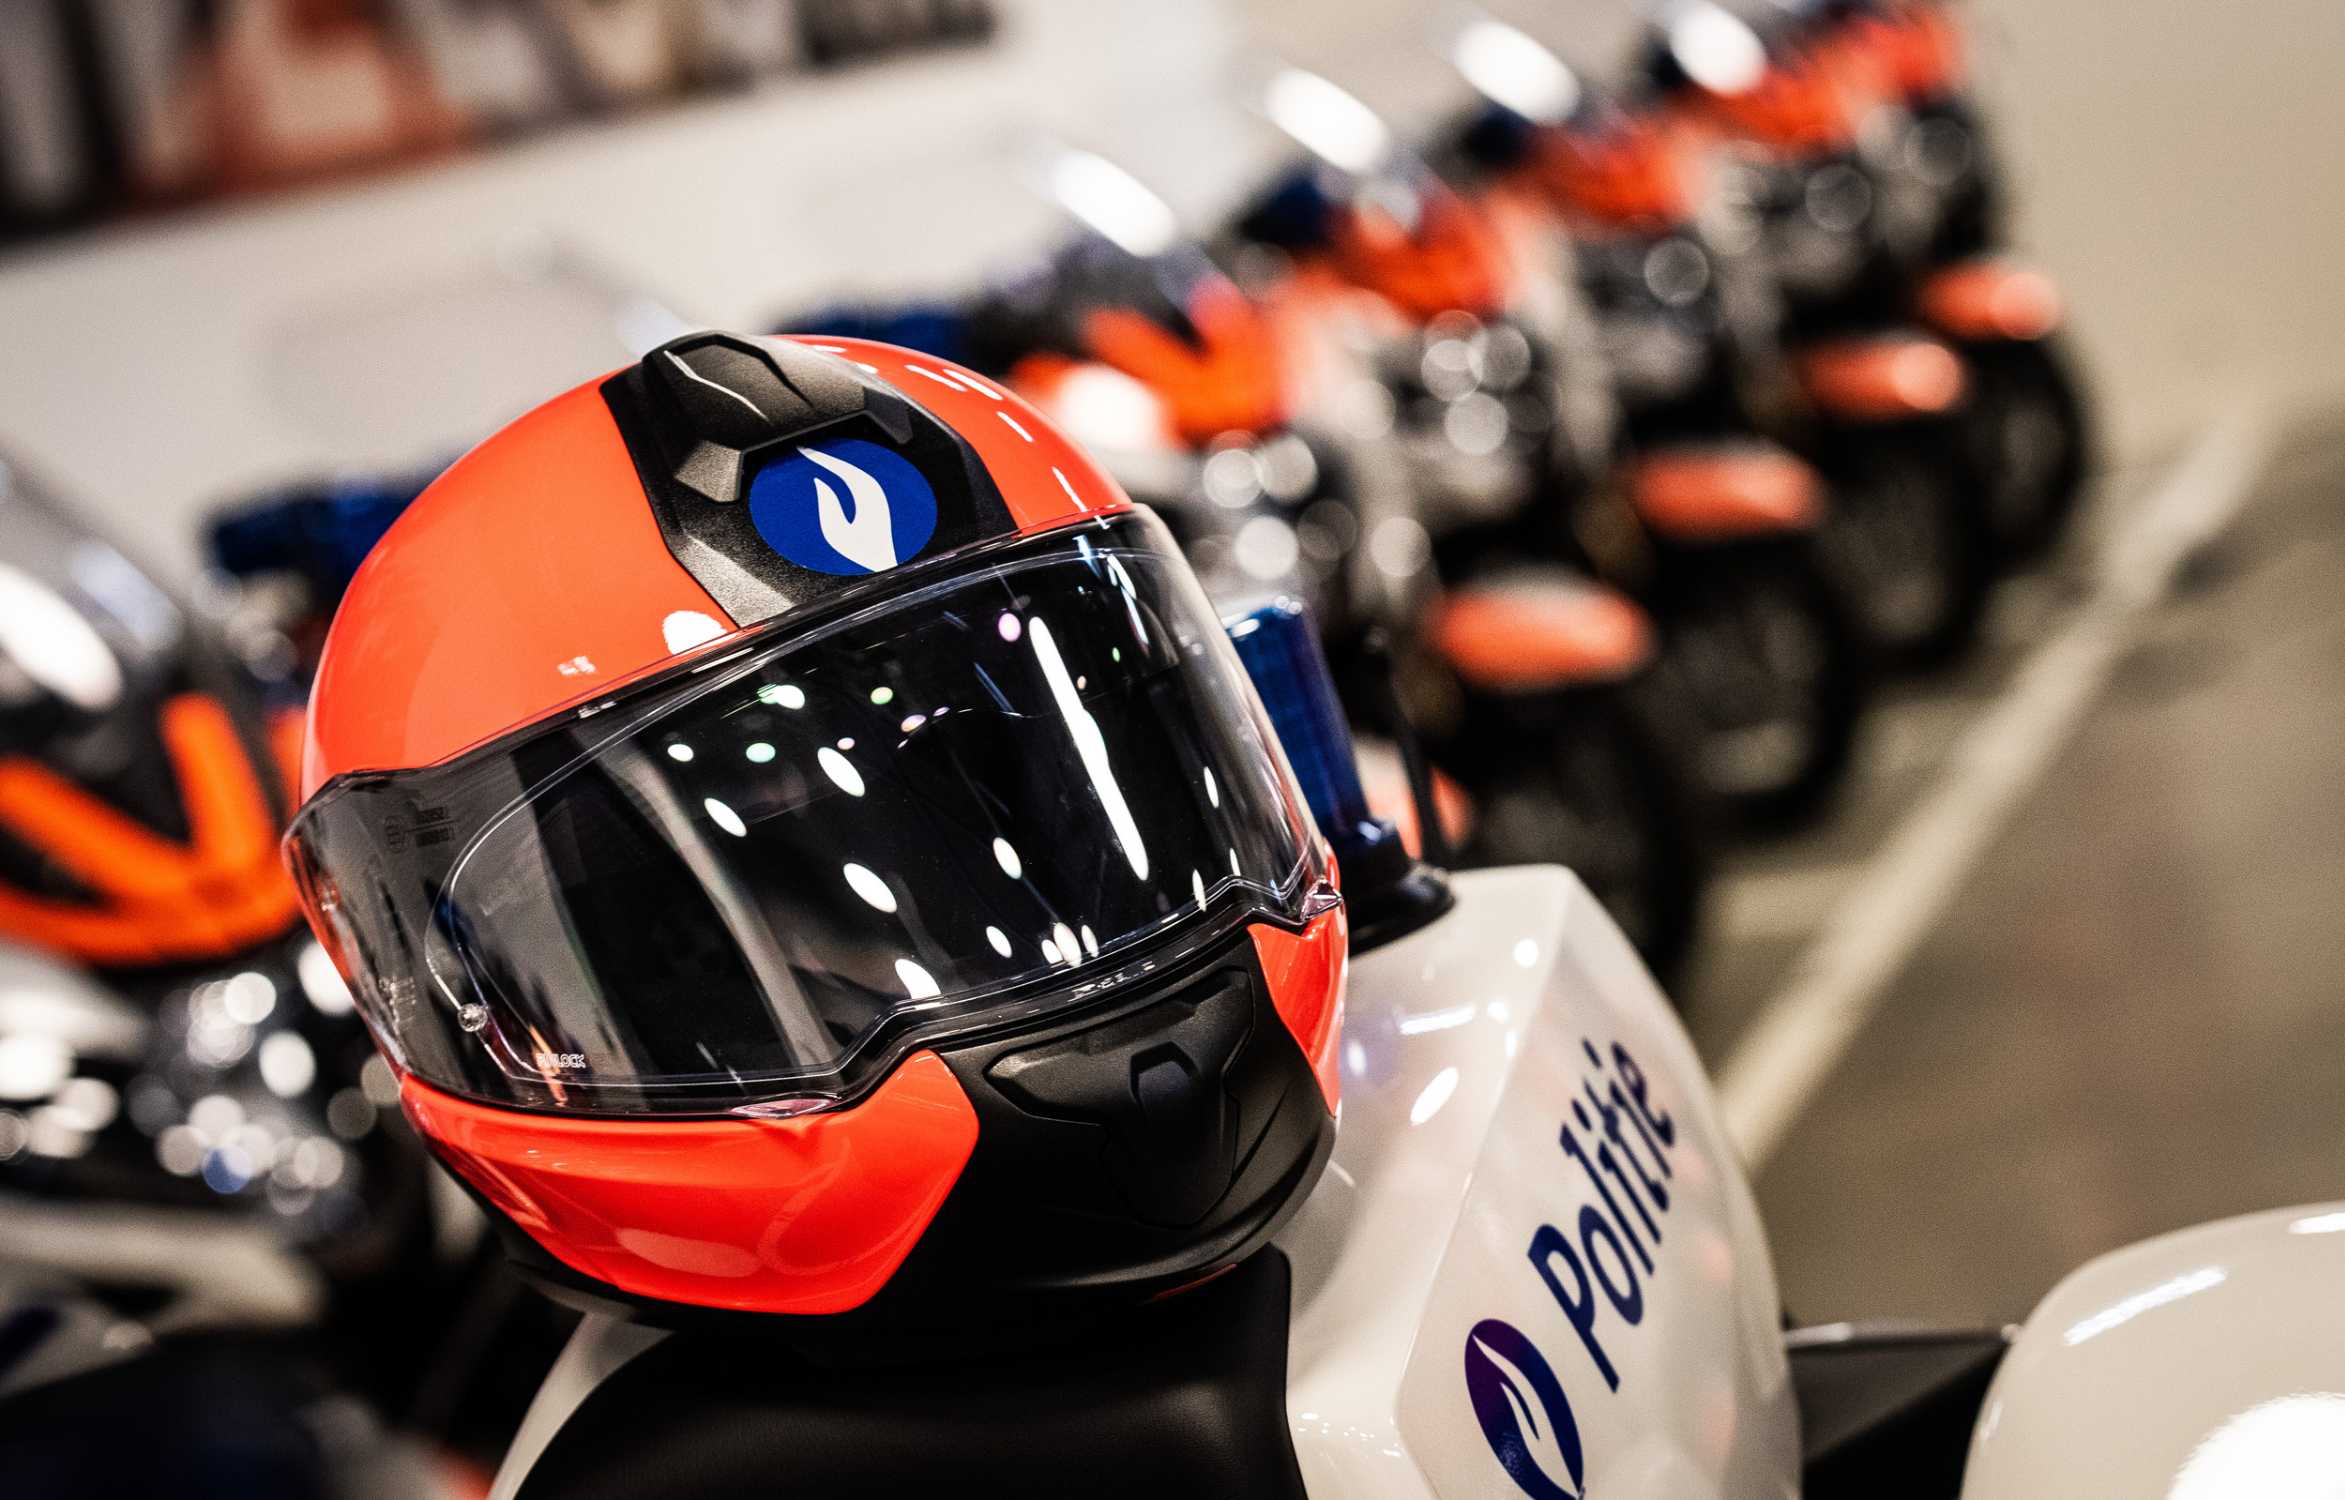 BMW Motorrad System helmet for the Belgian Police  (10/2018)